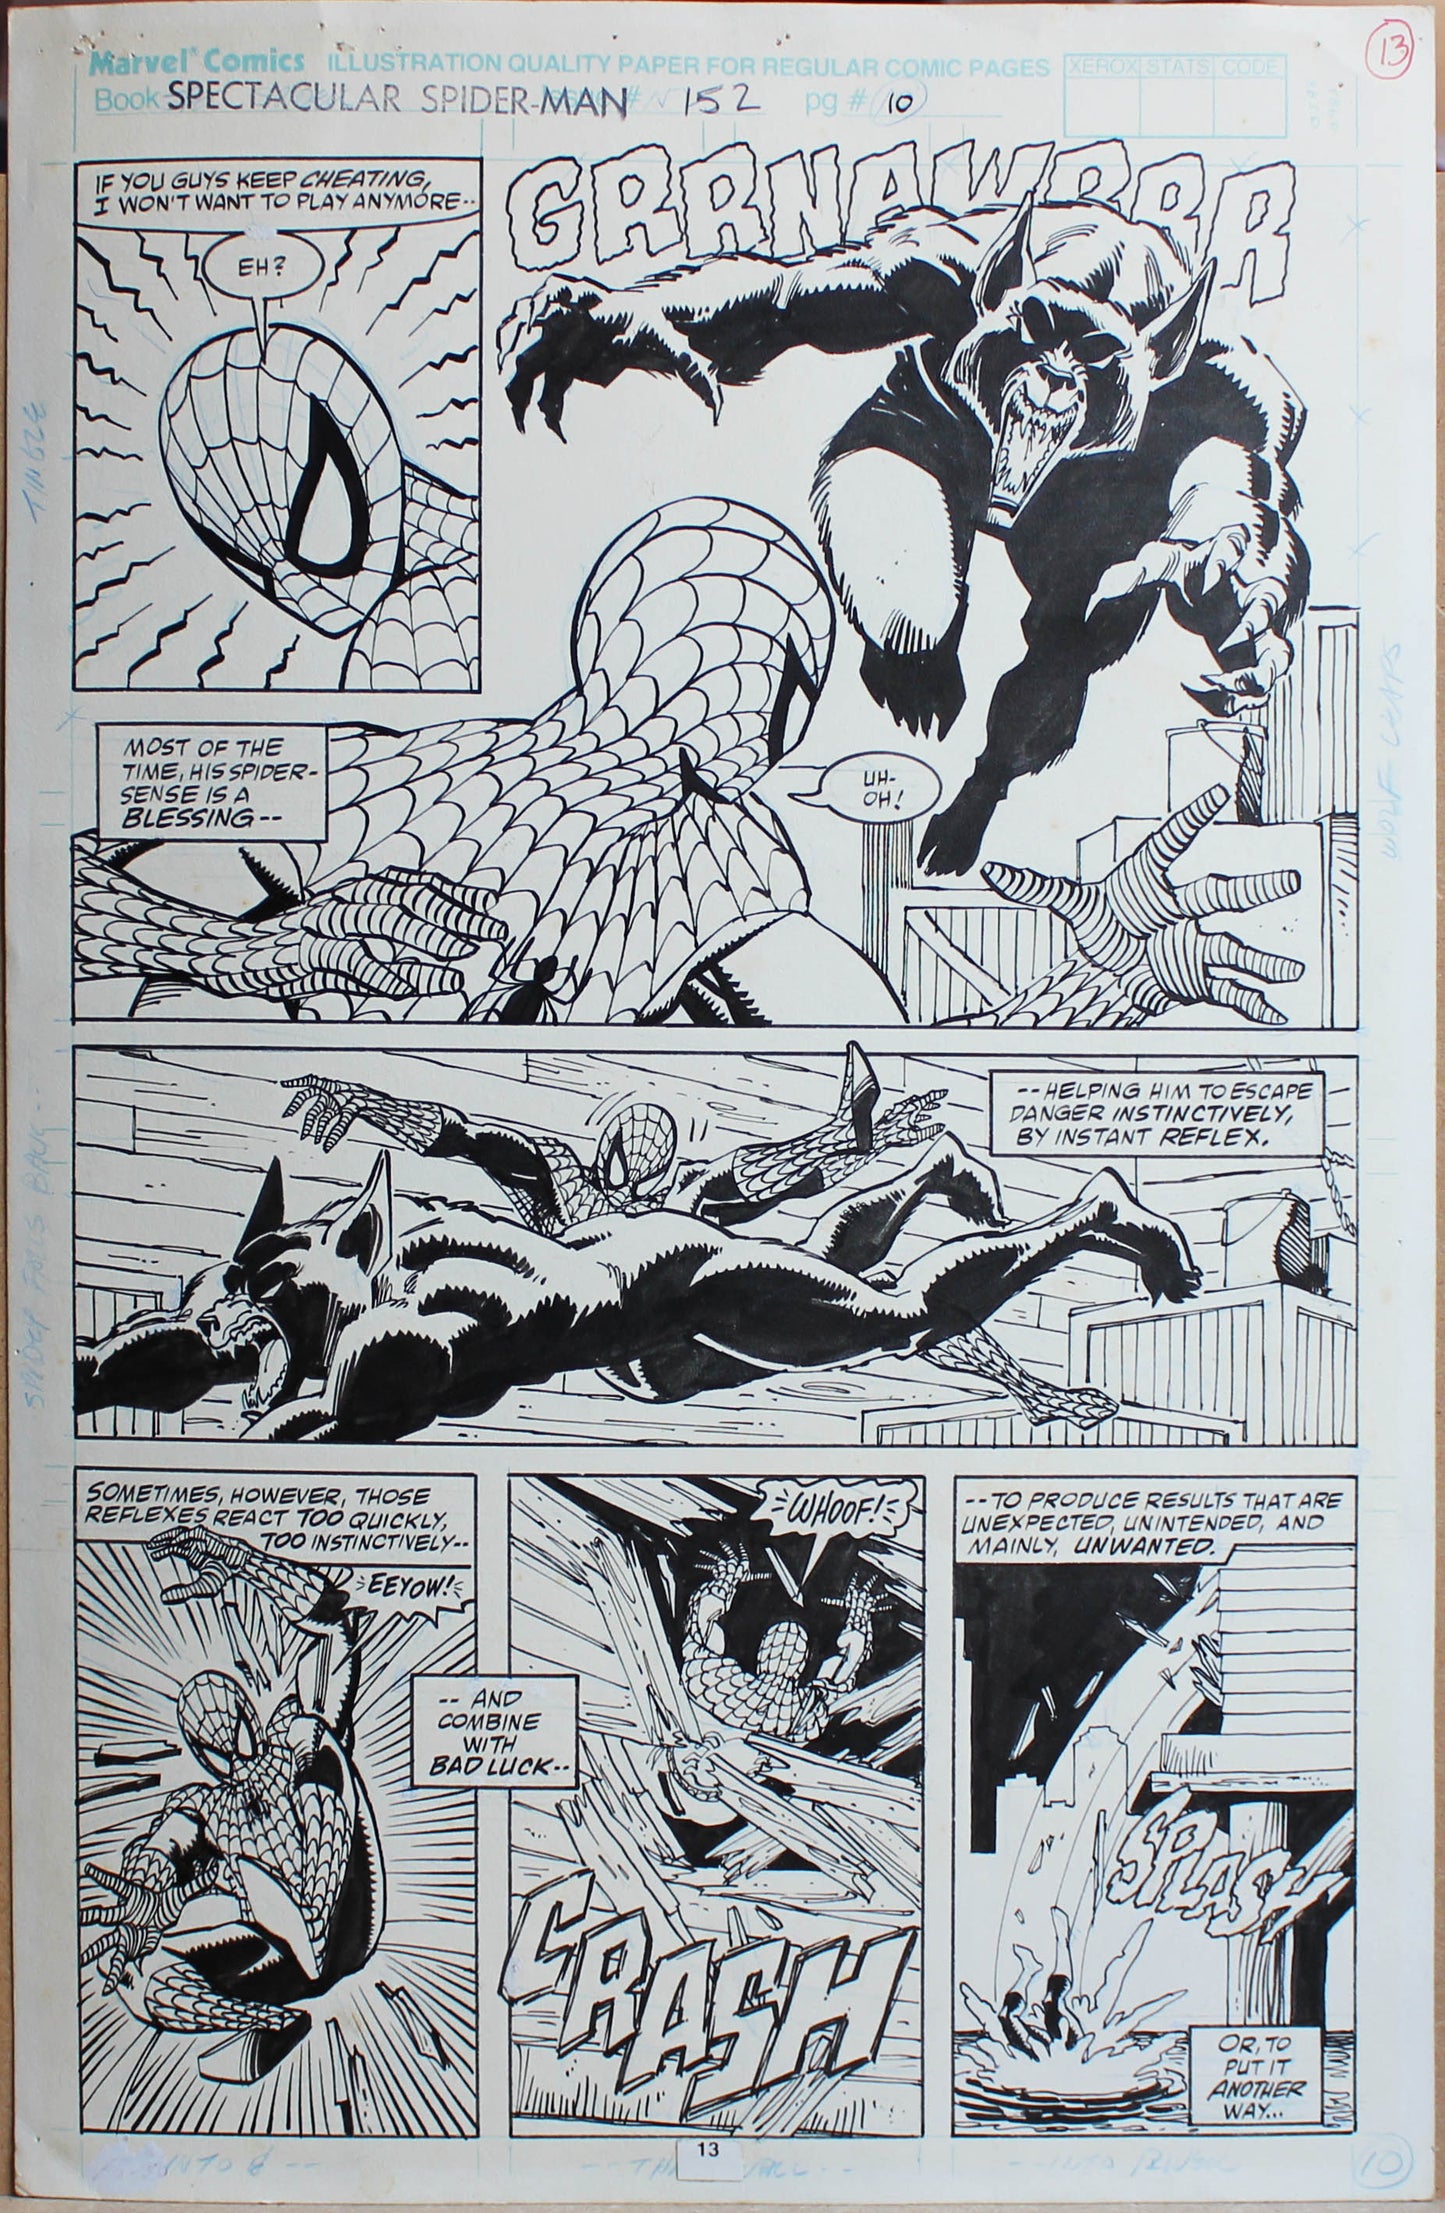 Originalseite Spectacular Spider-Man Vol. 1, 152 Comic Book Page 13